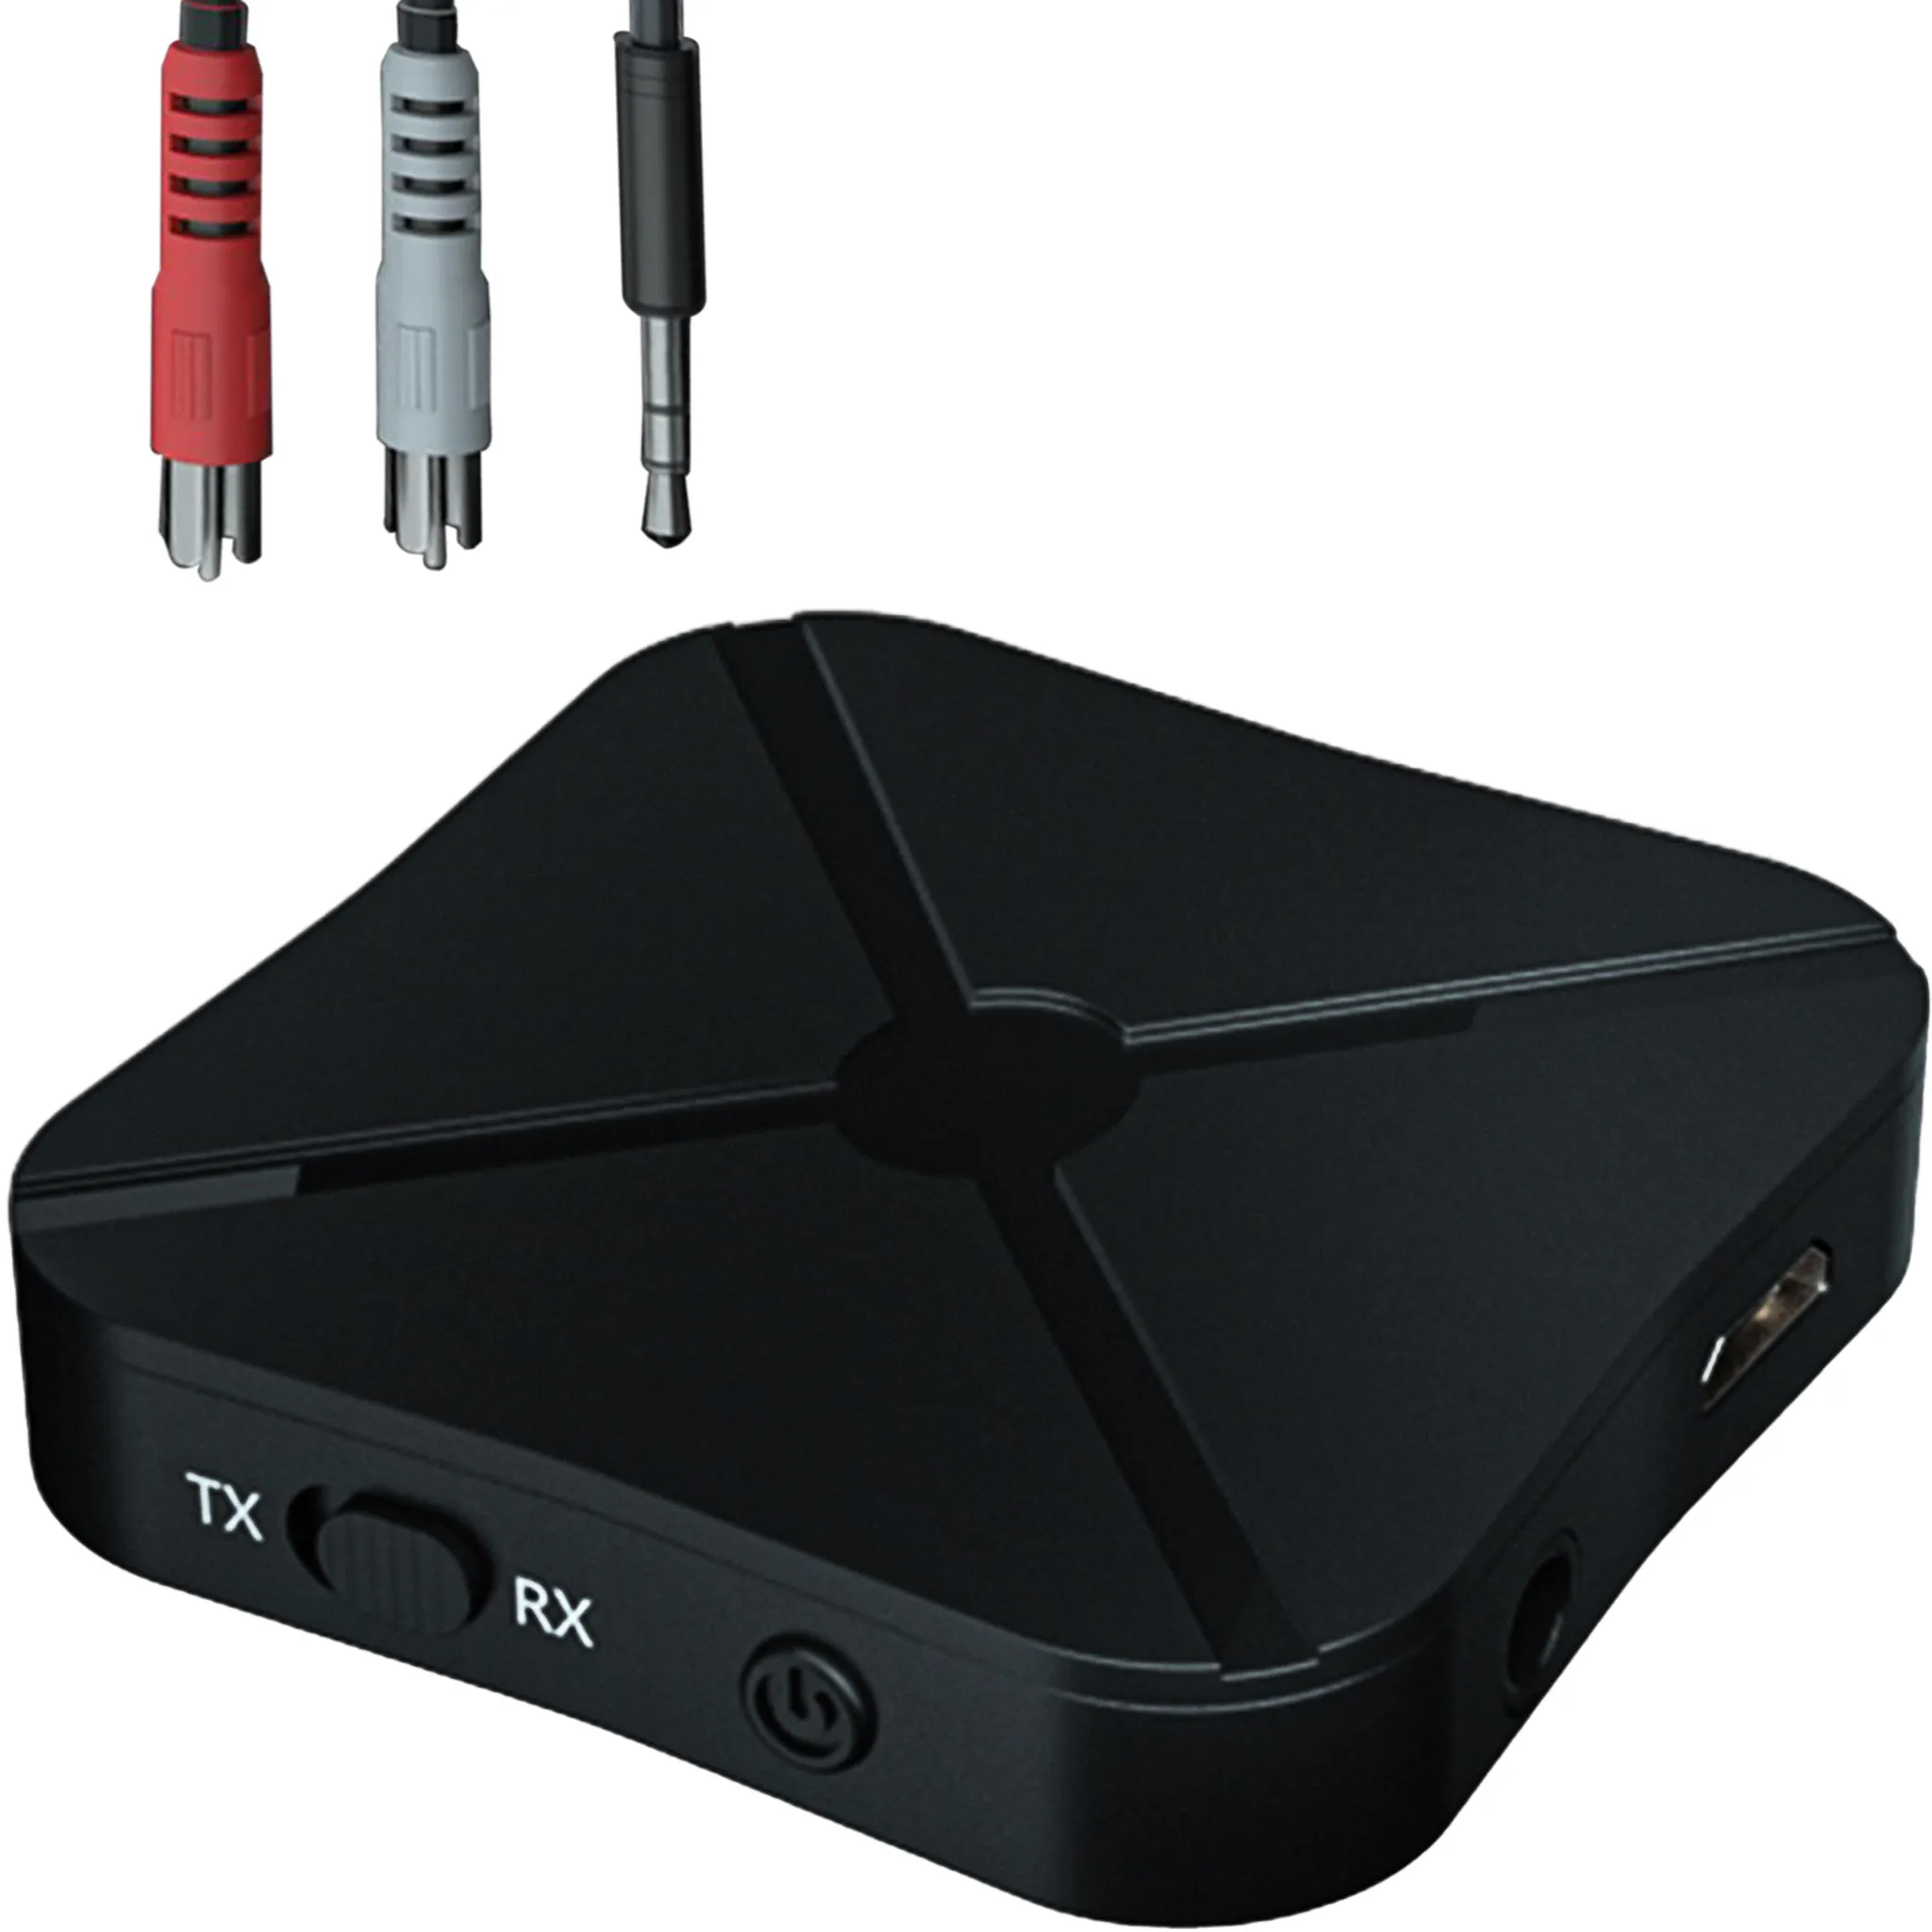 Kaufe 4-in-1-USB-Bluetooth-5.0-Dongle-Adapter, Empfänger, Sender,  HiFi-Stereo-Wireless-Audio-Adapter, USB 3,5 mm Klinke, 3,5 mm Aux für  PC-Desktops, Kopfhörer